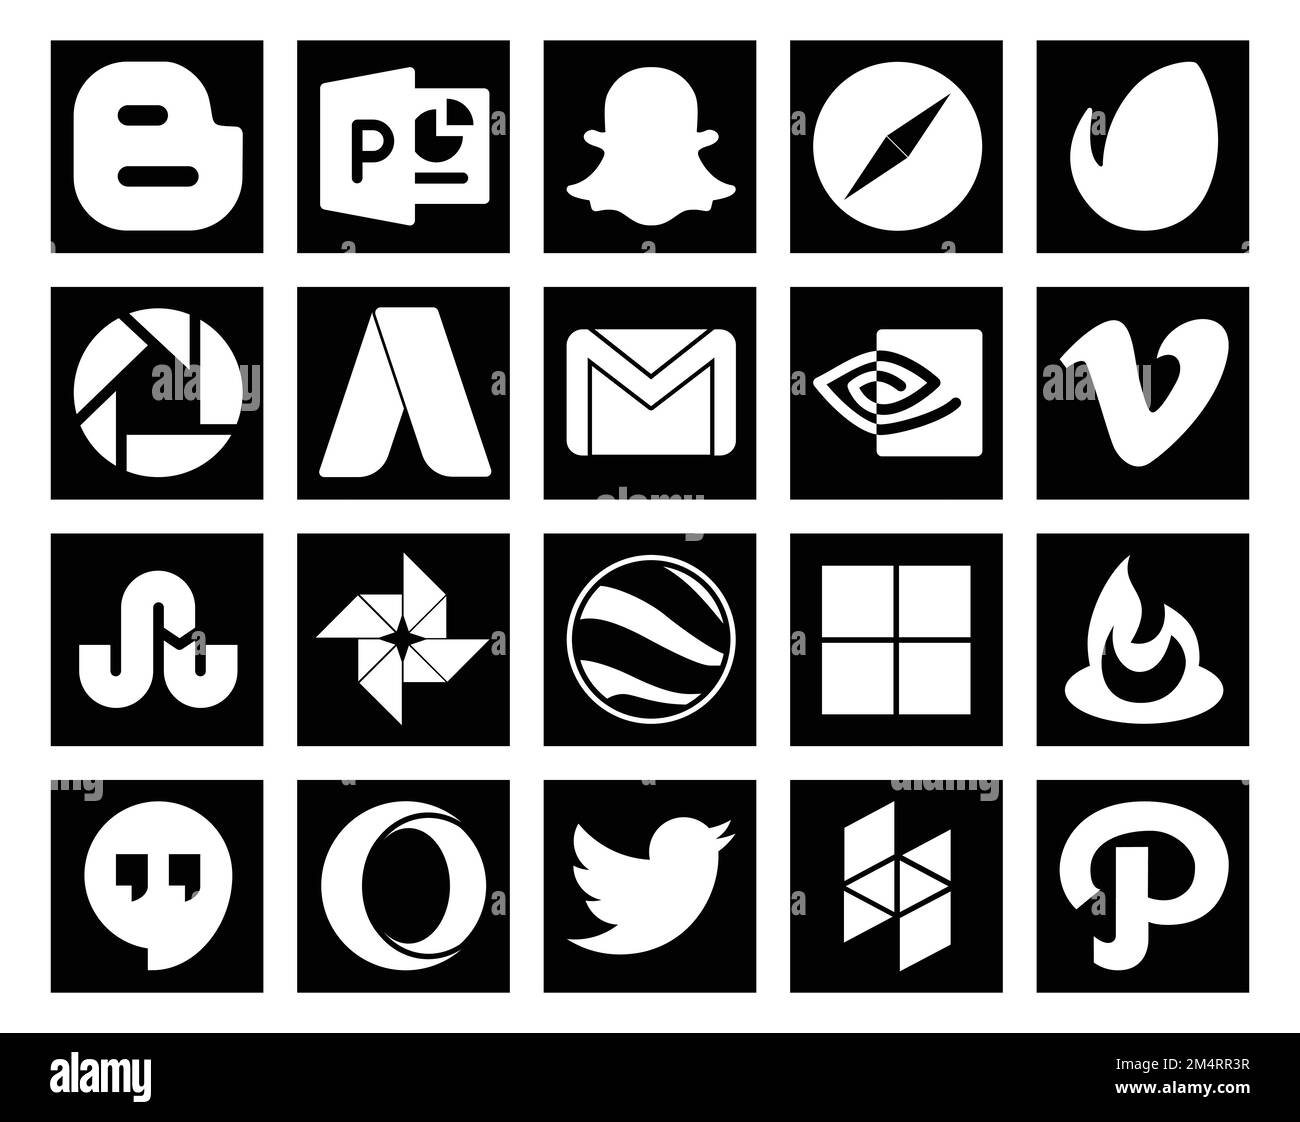 20 Social Media Icon Pack Including delicious. photo. gmail. stumbleupon. vimeo Stock Vector